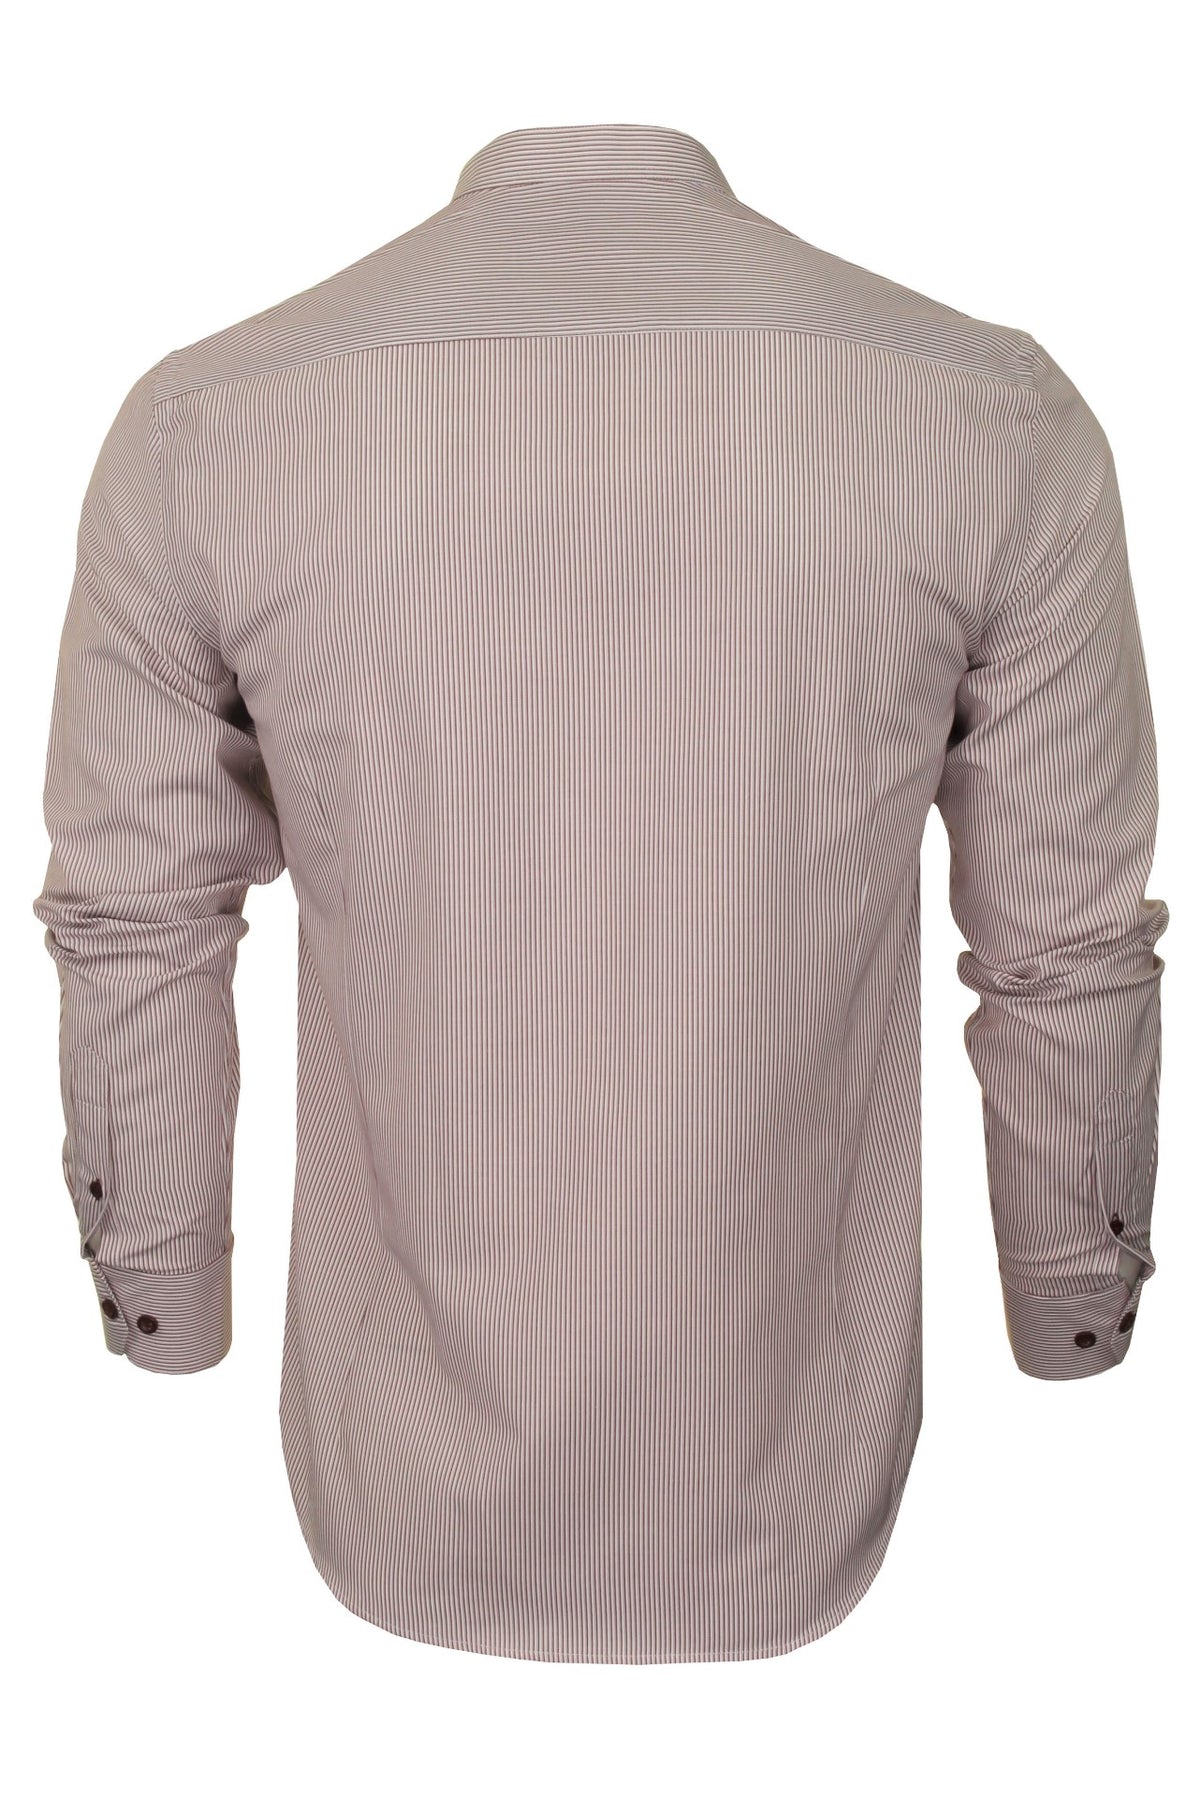 Xact Mens Stripe Grandad Shirt - Long Sleeved, 03, Xsh1078, Burgundy Stripe